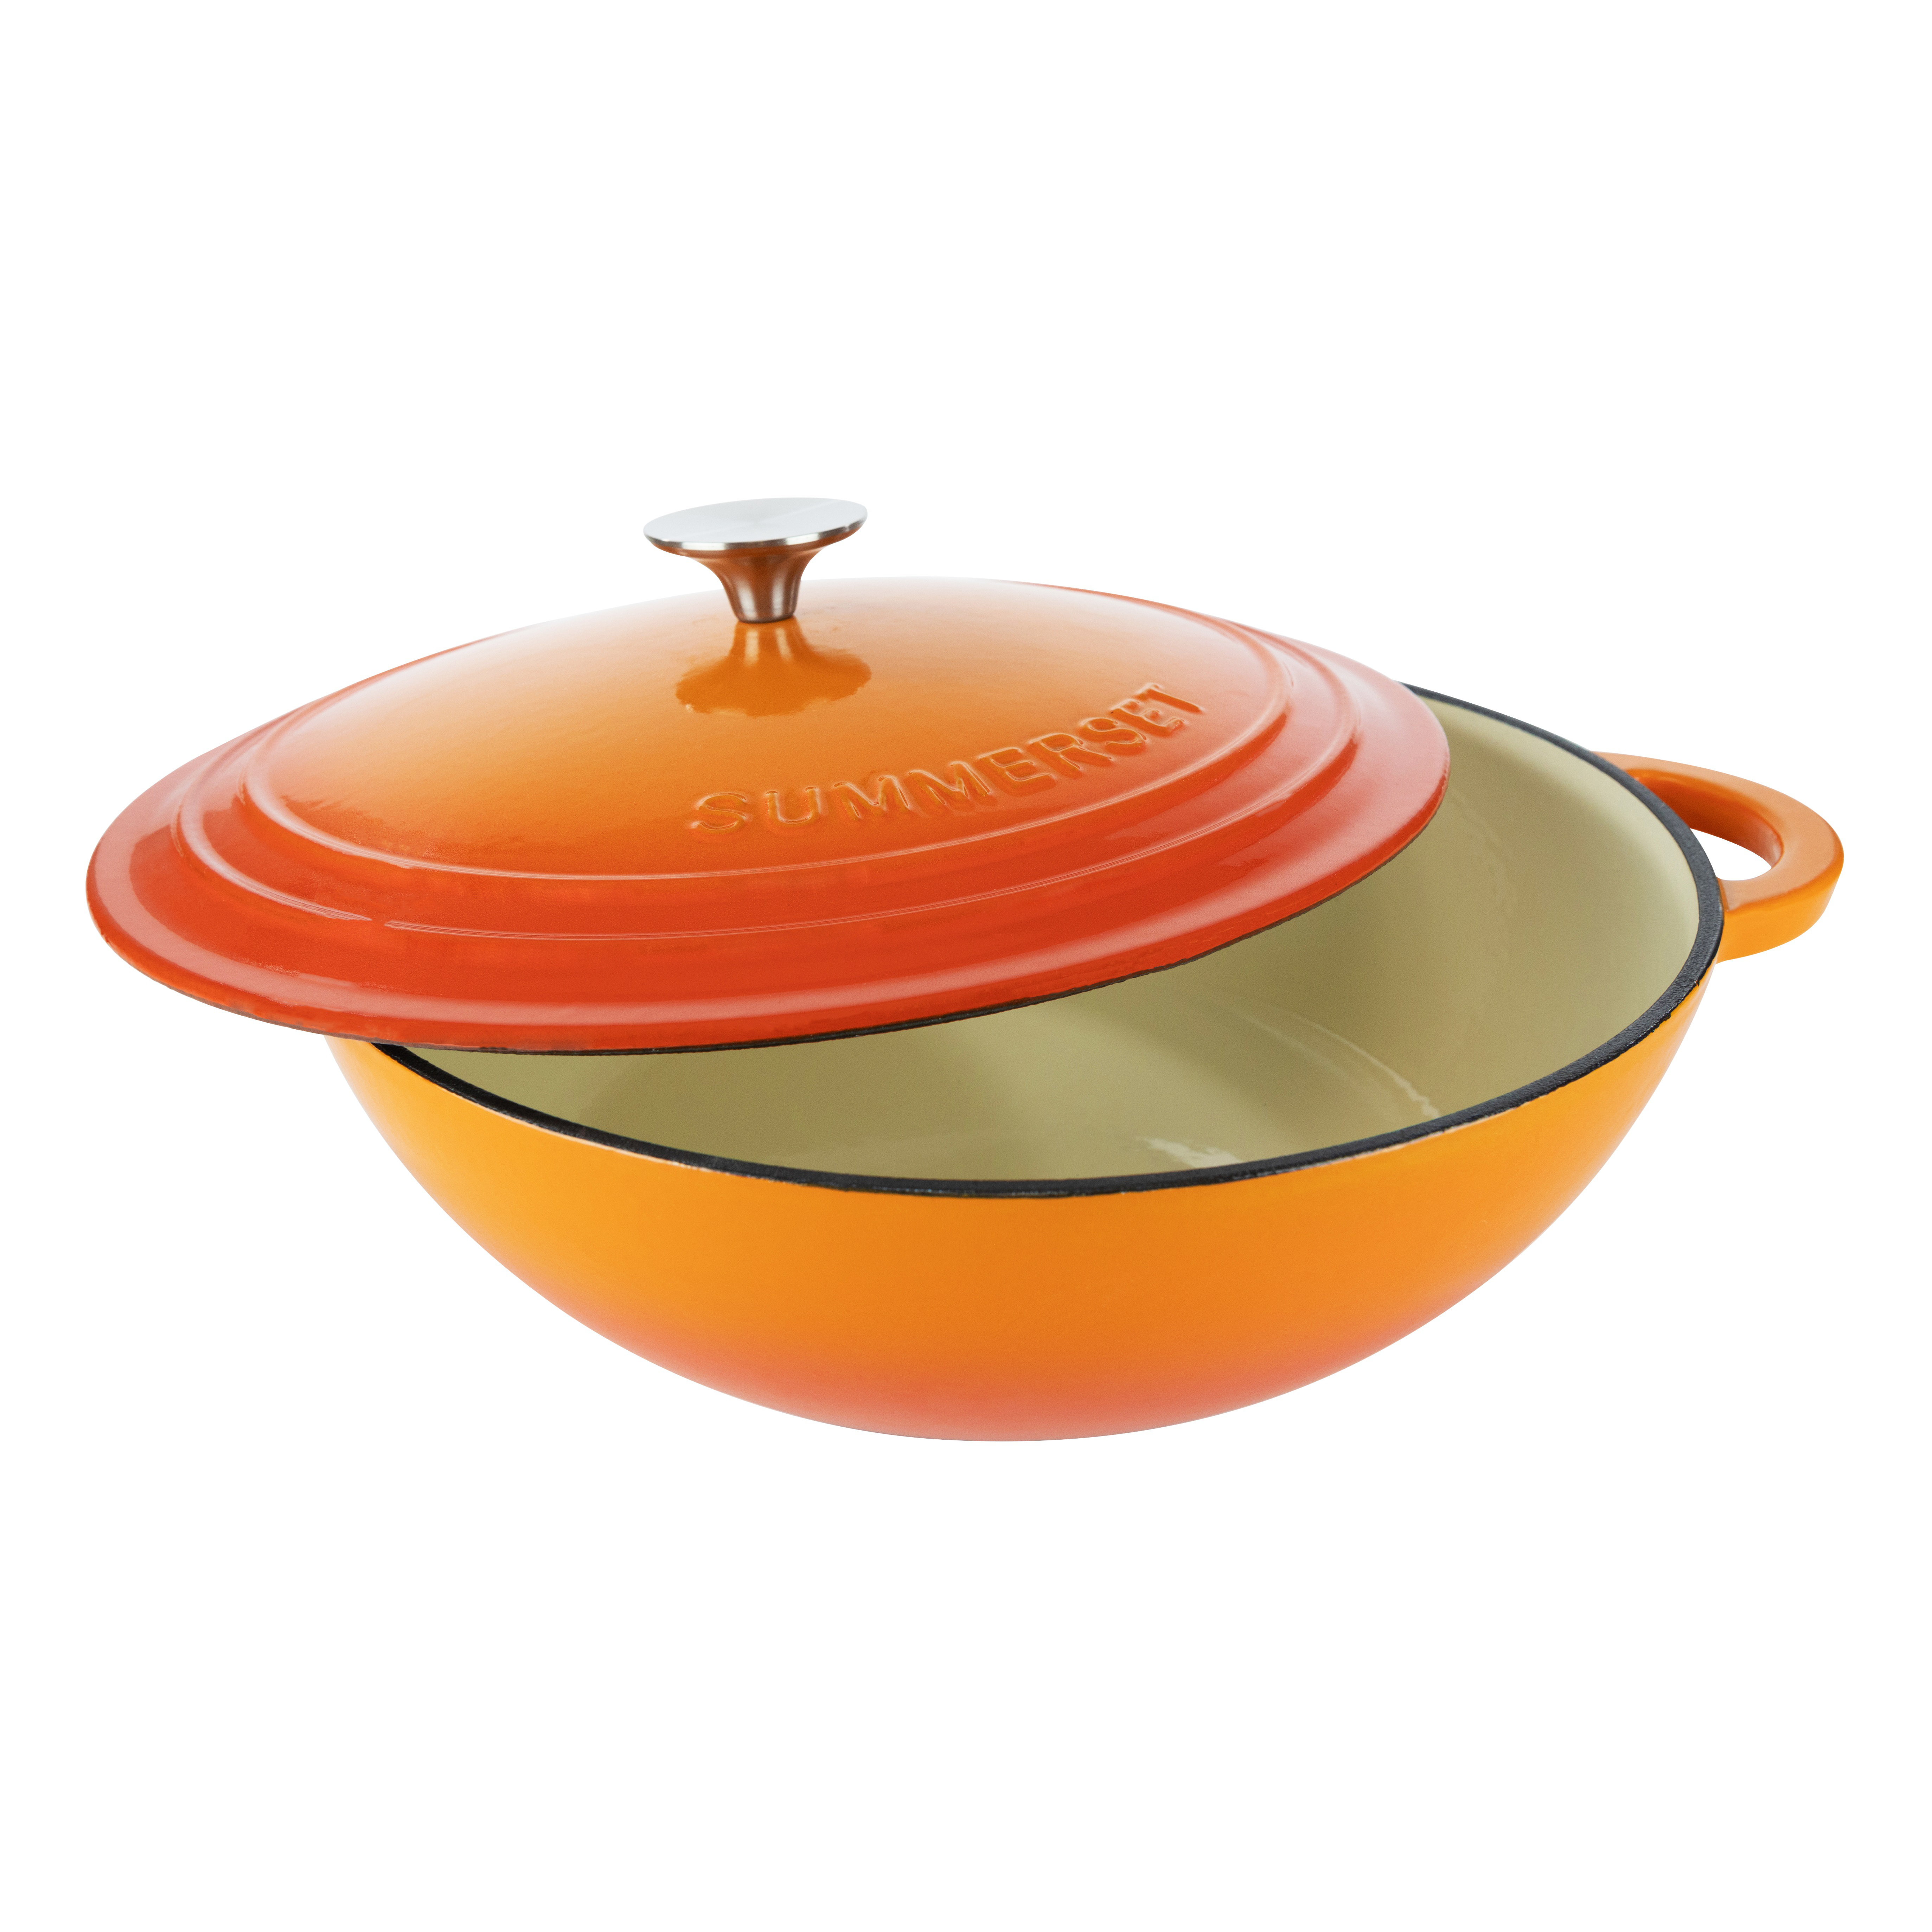 Crock-pot Artisan 5 qt. Round Cast Iron Nonstick Dutch Oven in Sunset Orange with Lid